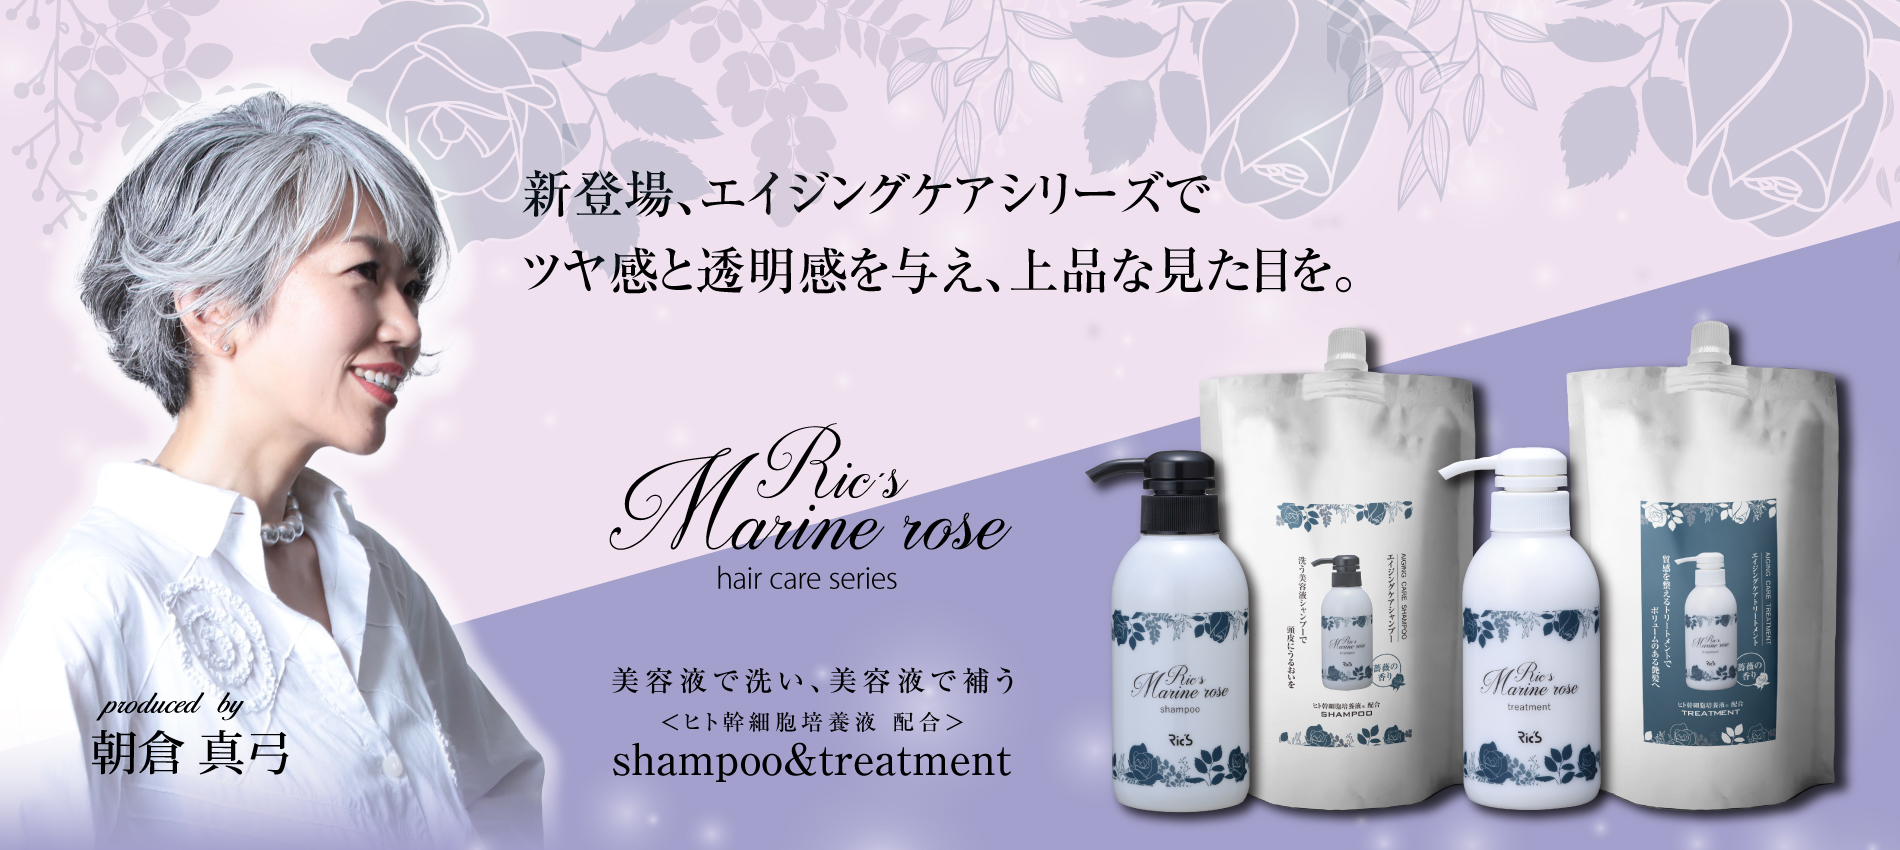 Scalp Sherbets Marine rose shampoo&treatment